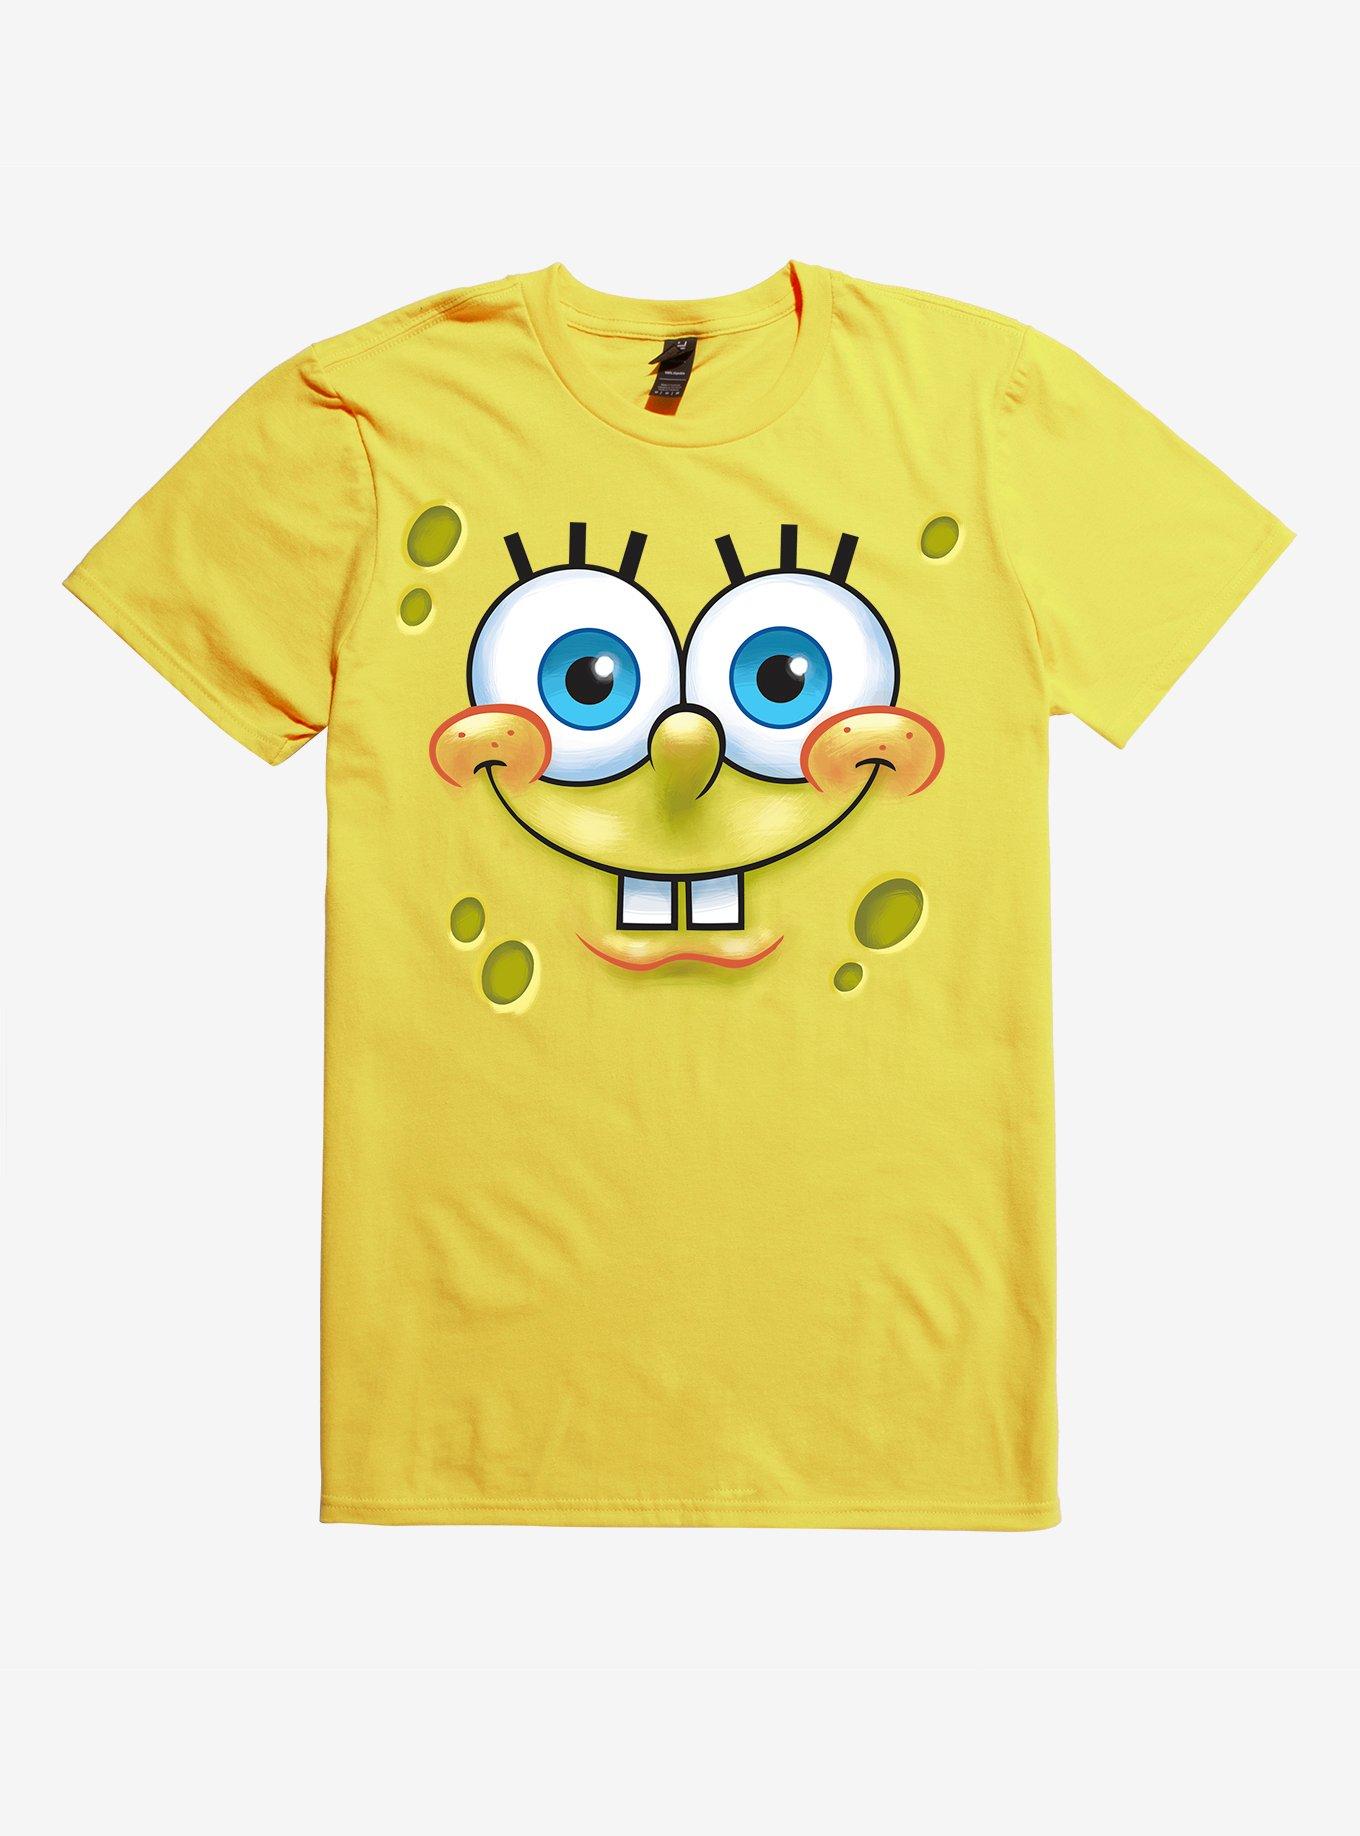 Spongebob Squarepants Face T-Shirt